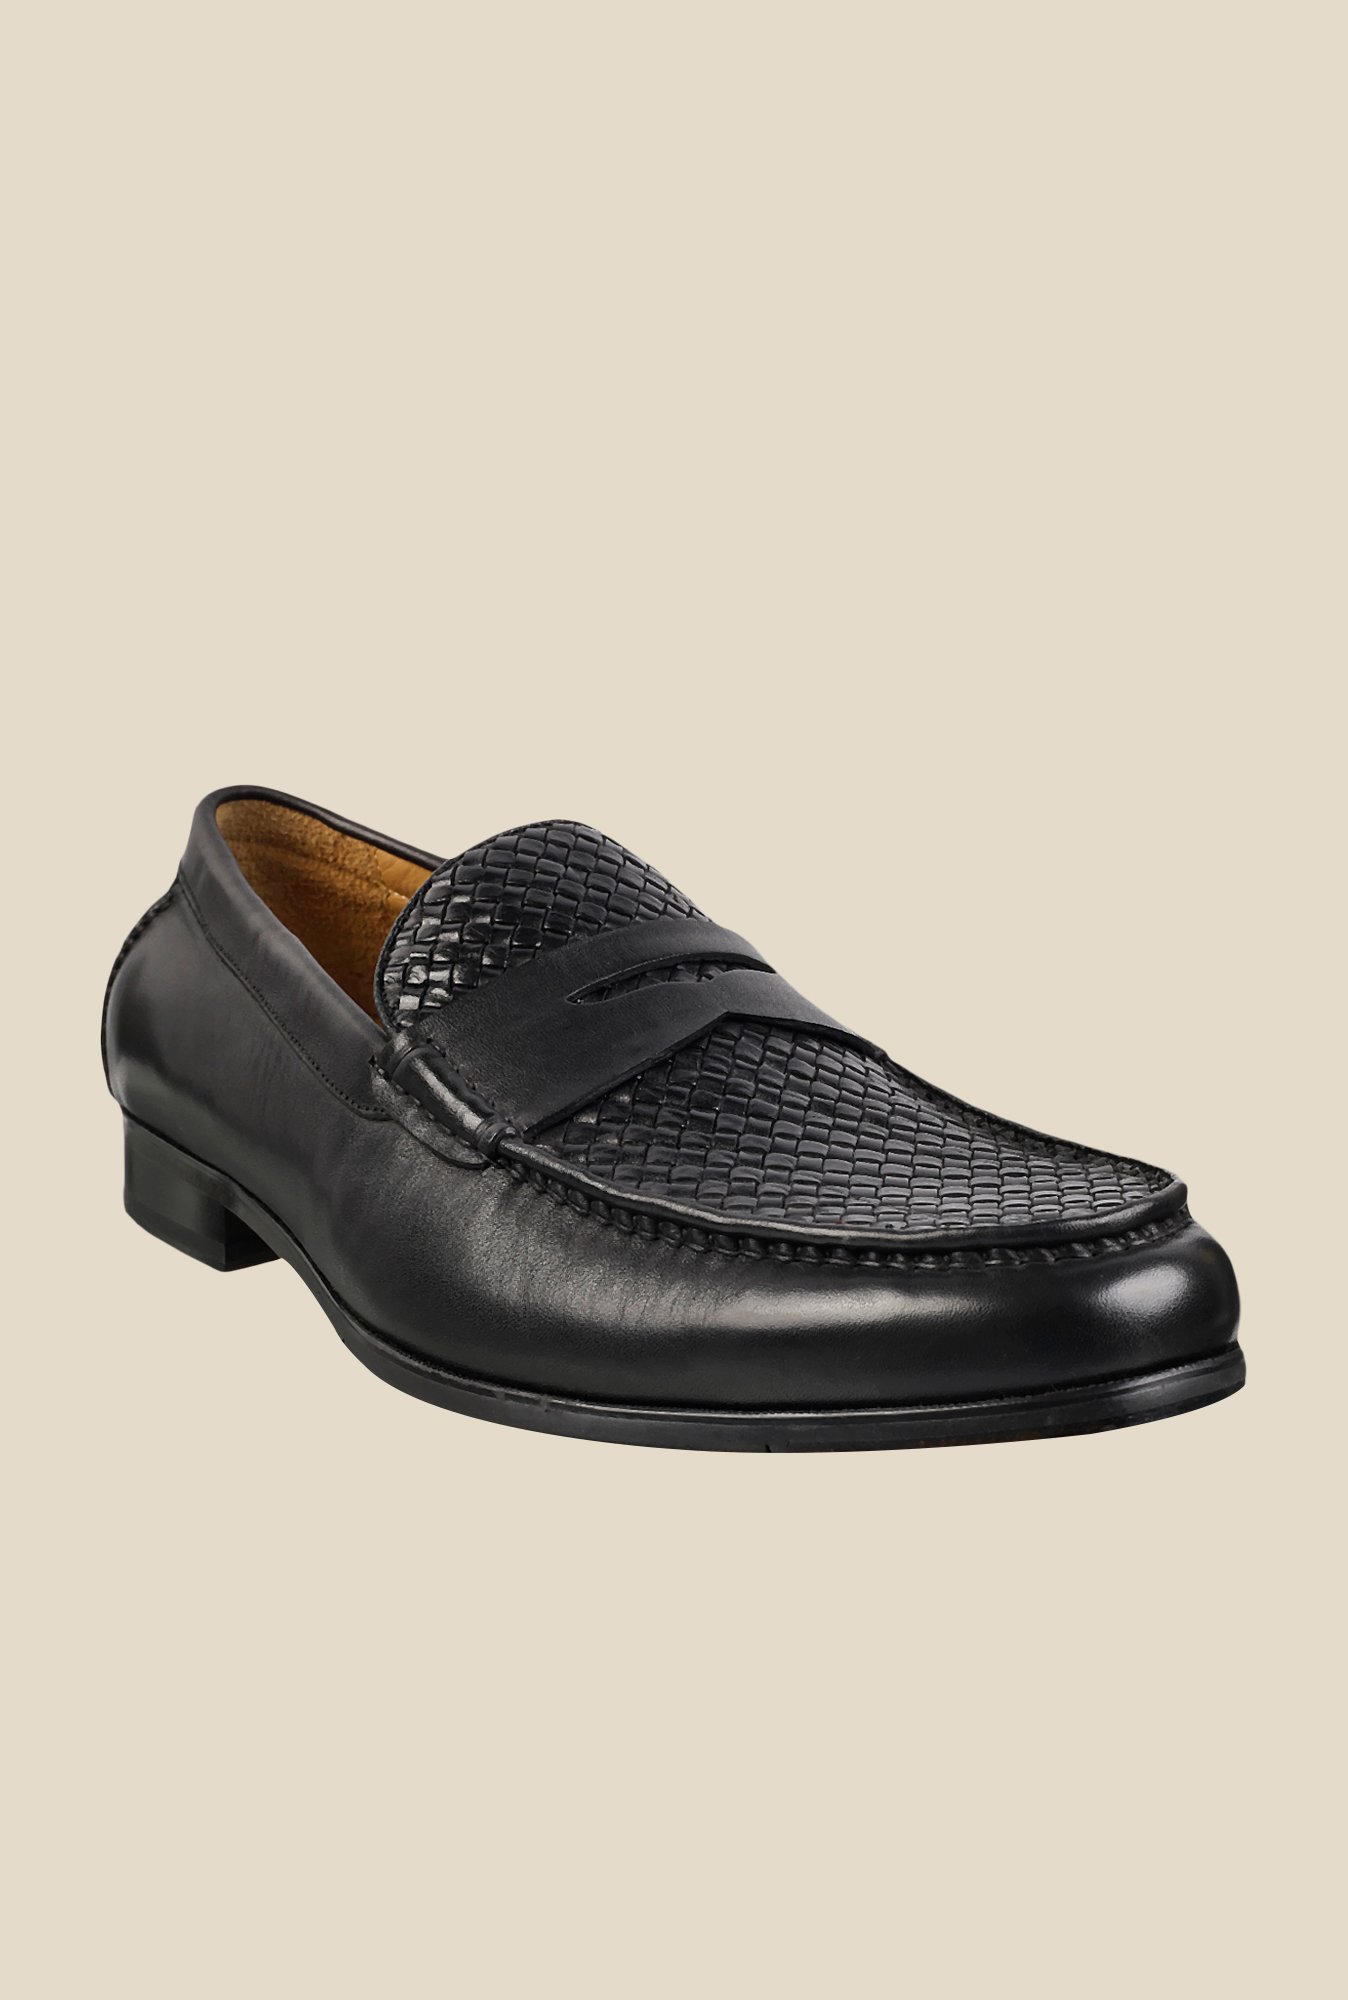 El Paso Da vinci Loafers For Men  Buy Black Color El Paso Da vinci Loafers  For Men Online at Best Price  Shop Online for Footwears in India   Flipkartcom